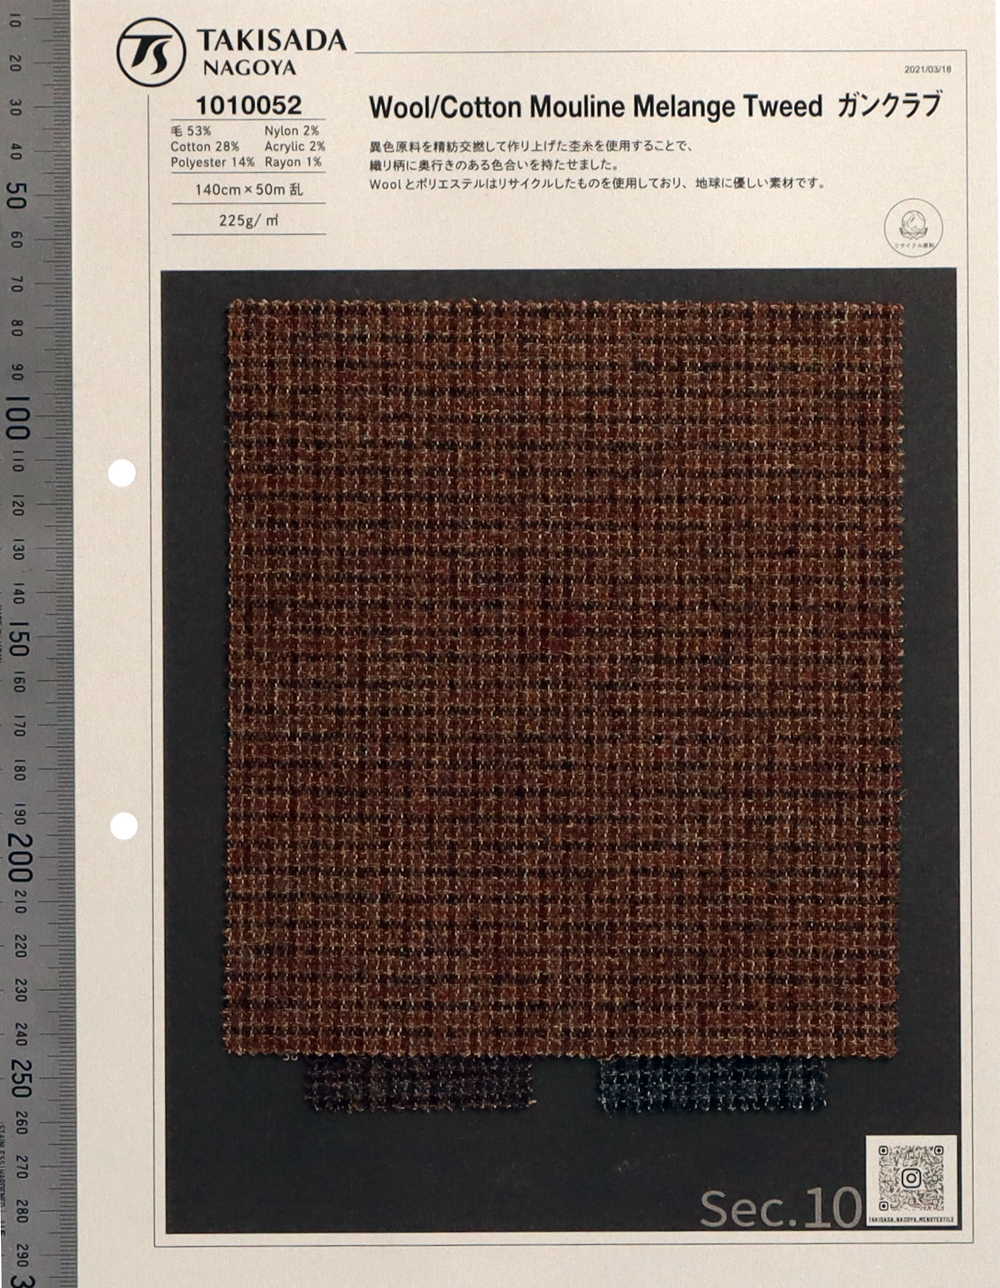 1010052 RE: NEWOOL® Laine / Coton Melange Tweed Gun Club Check[Fabrication De Textile] Takisada Nagoya